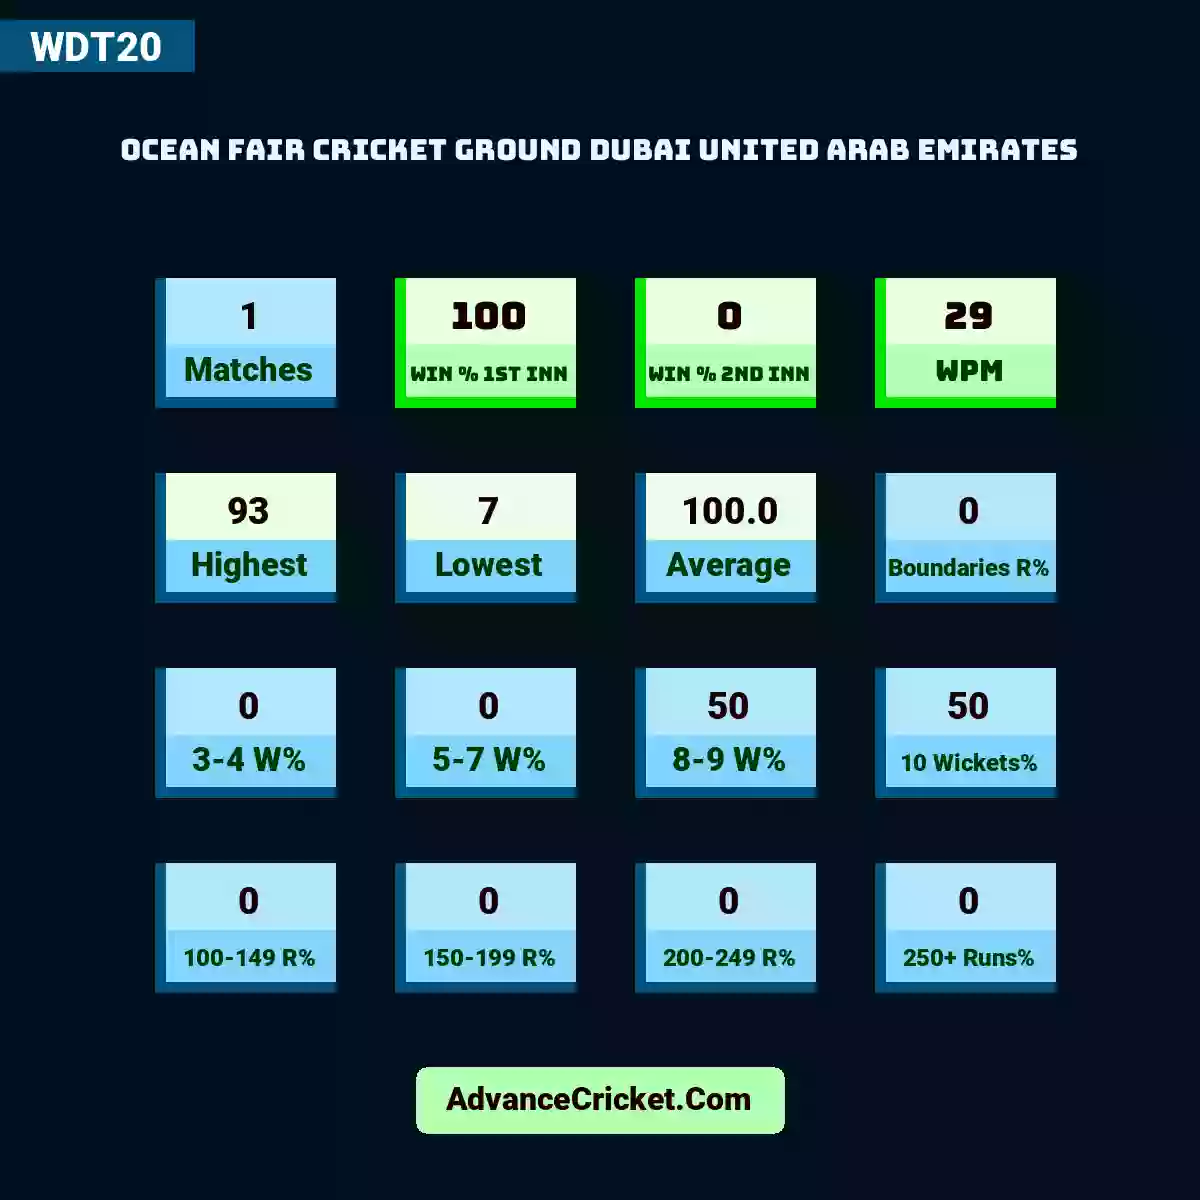 Image showing Ocean Fair Cricket Ground Dubai United Arab Emirates with Matches: 1, Win % 1st Inn: 100, Win % 2nd Inn: 0, WPM: 29, Highest: 93, Lowest: 7, Average: 100.0, Boundaries R%: 0, 3-4 W%: 0, 5-7 W%: 0, 8-9 W%: 50, 10 Wickets%: 50, 100-149 R%: 0, 150-199 R%: 0, 200-249 R%: 0, 250+ Runs%: 0.